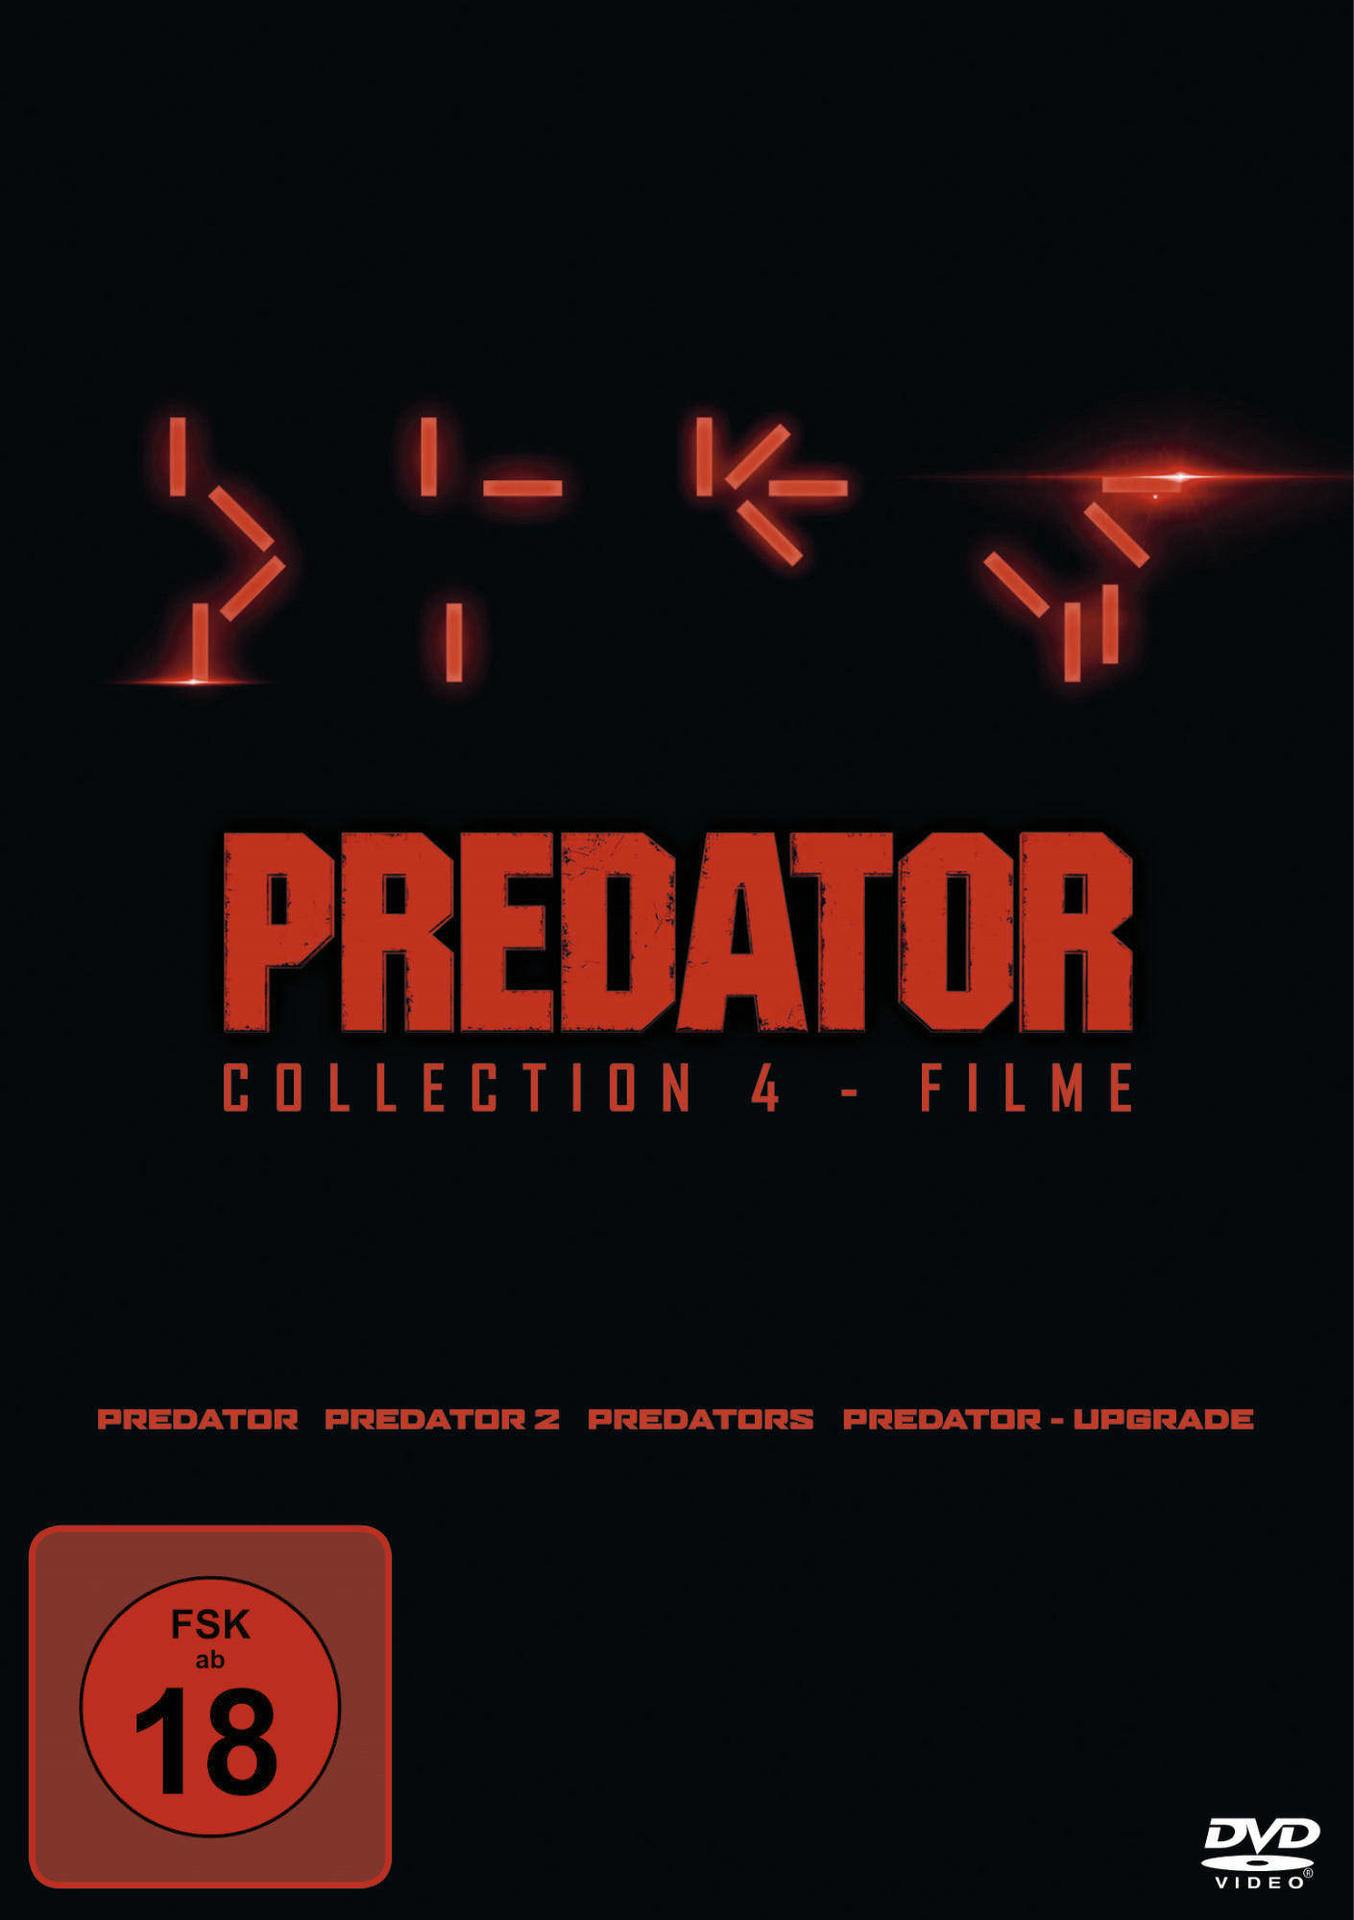 Predator Collection 1-4: - Predator, DVD Predator Upgrade Predator 2, Predators